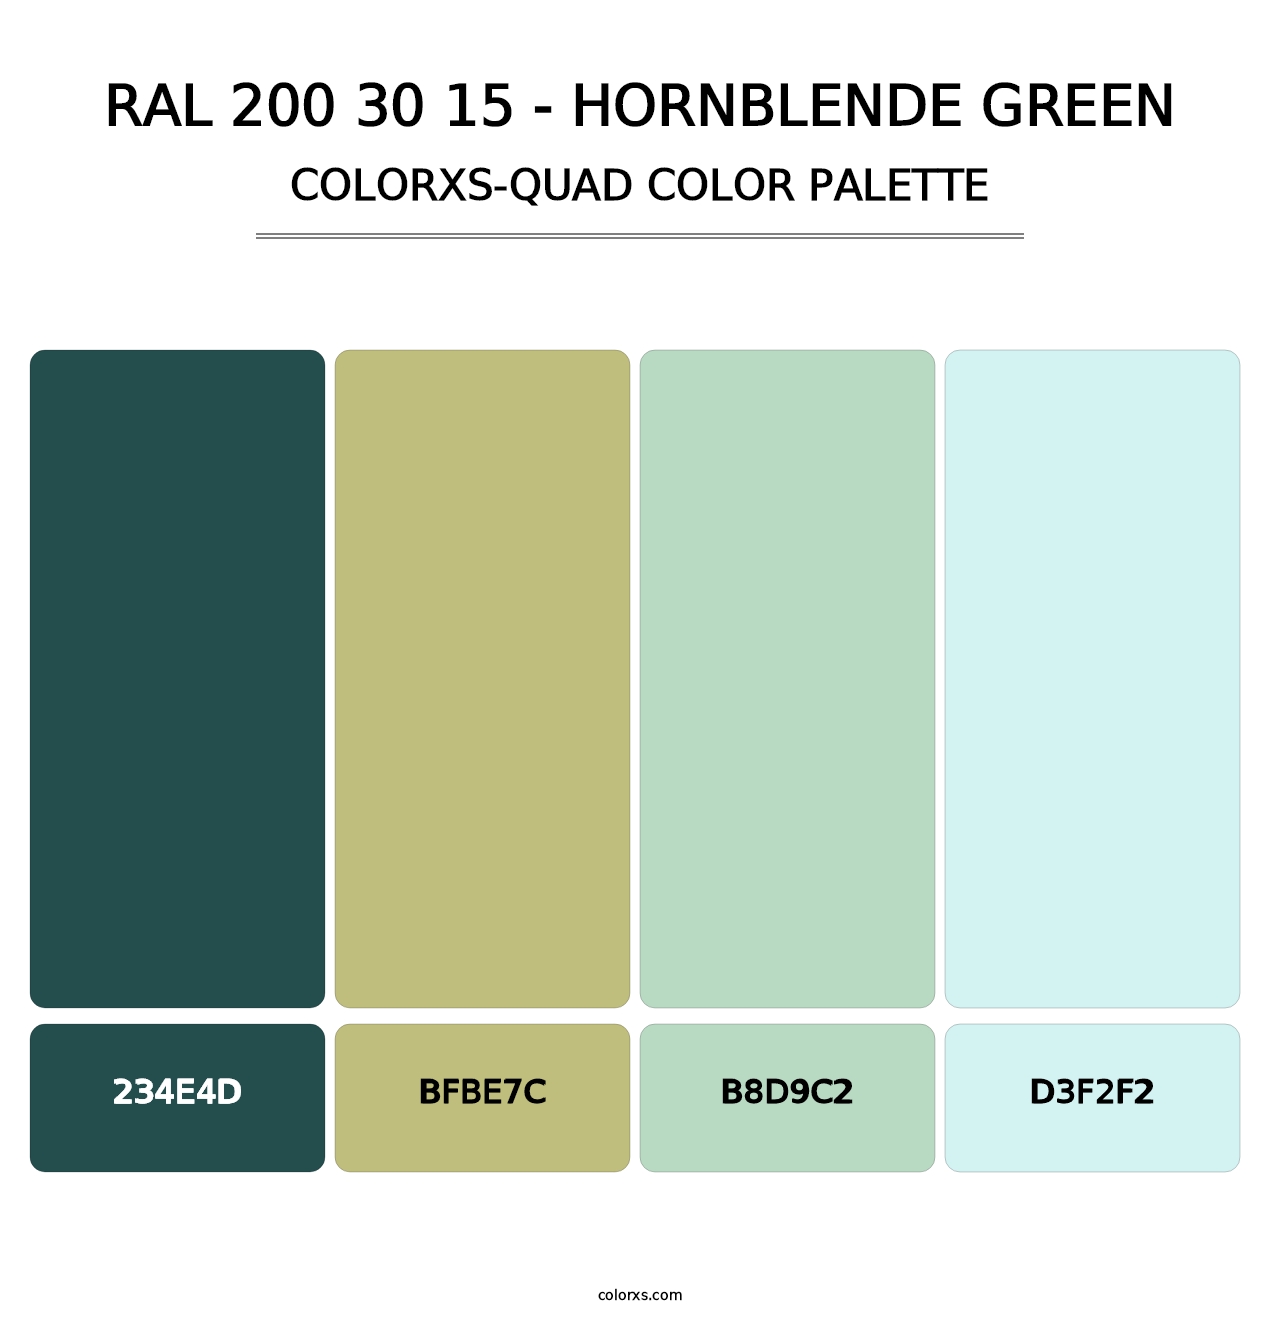 RAL 200 30 15 - Hornblende Green - Colorxs Quad Palette